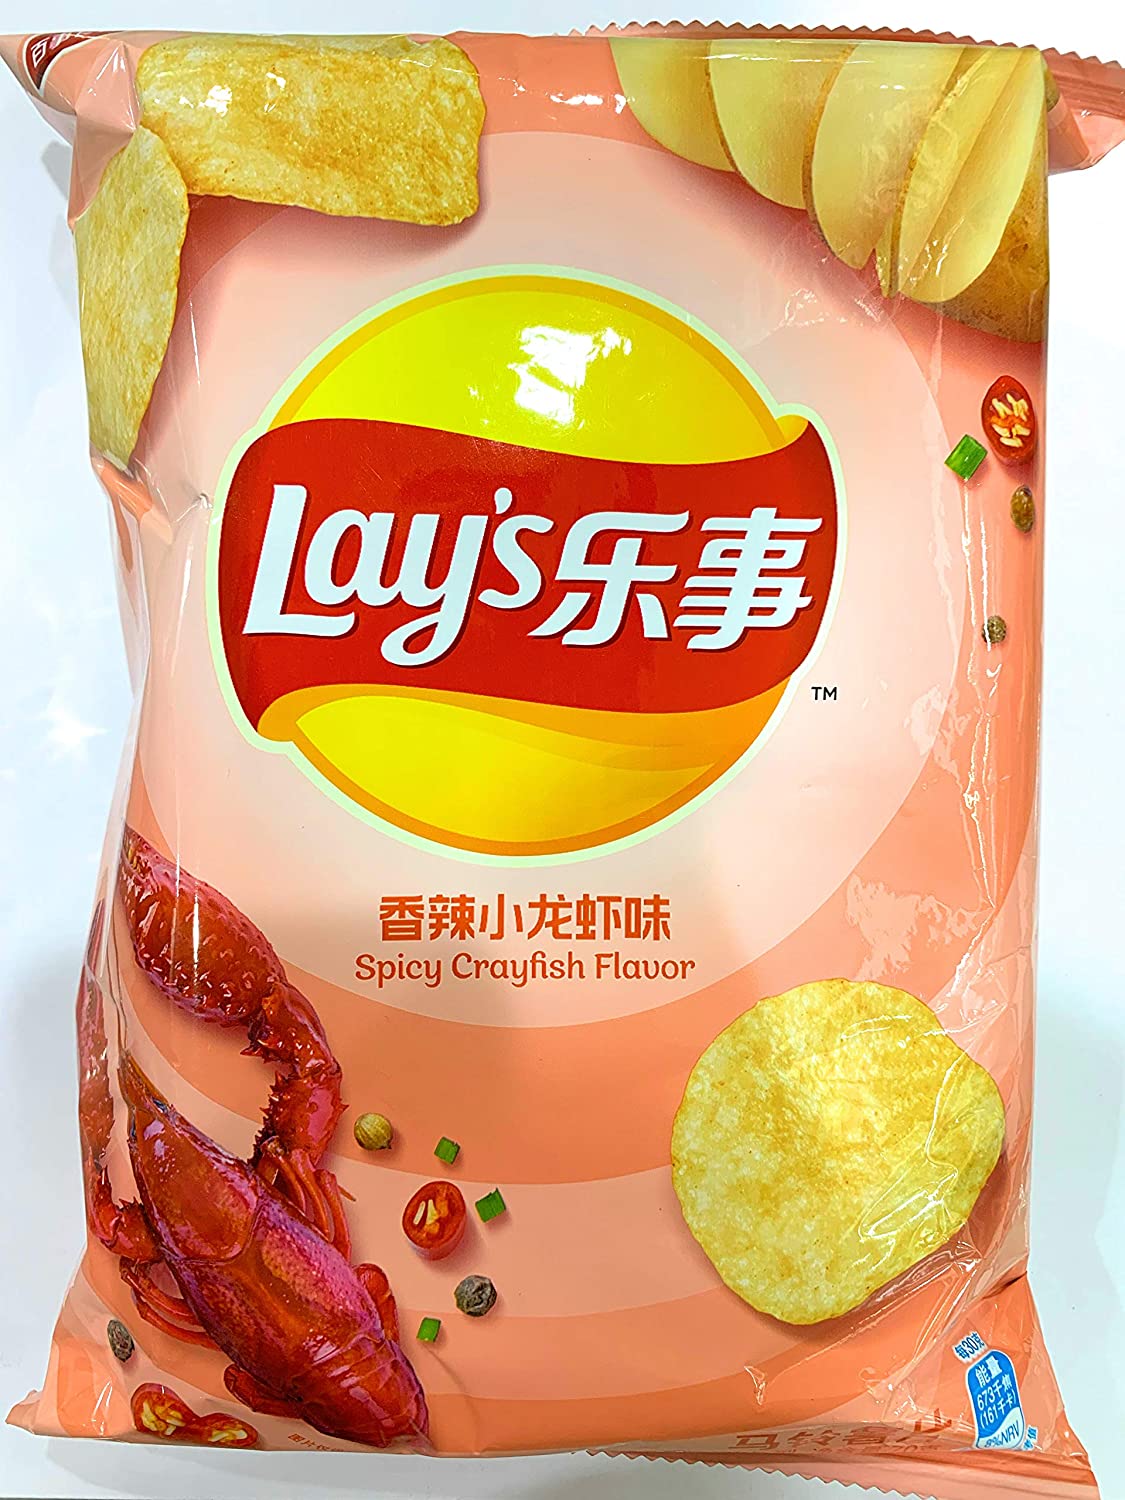 Lays Potato Chips Spicy Crayfish Flavor 香辣小龍蝦味 70g (2 bags)